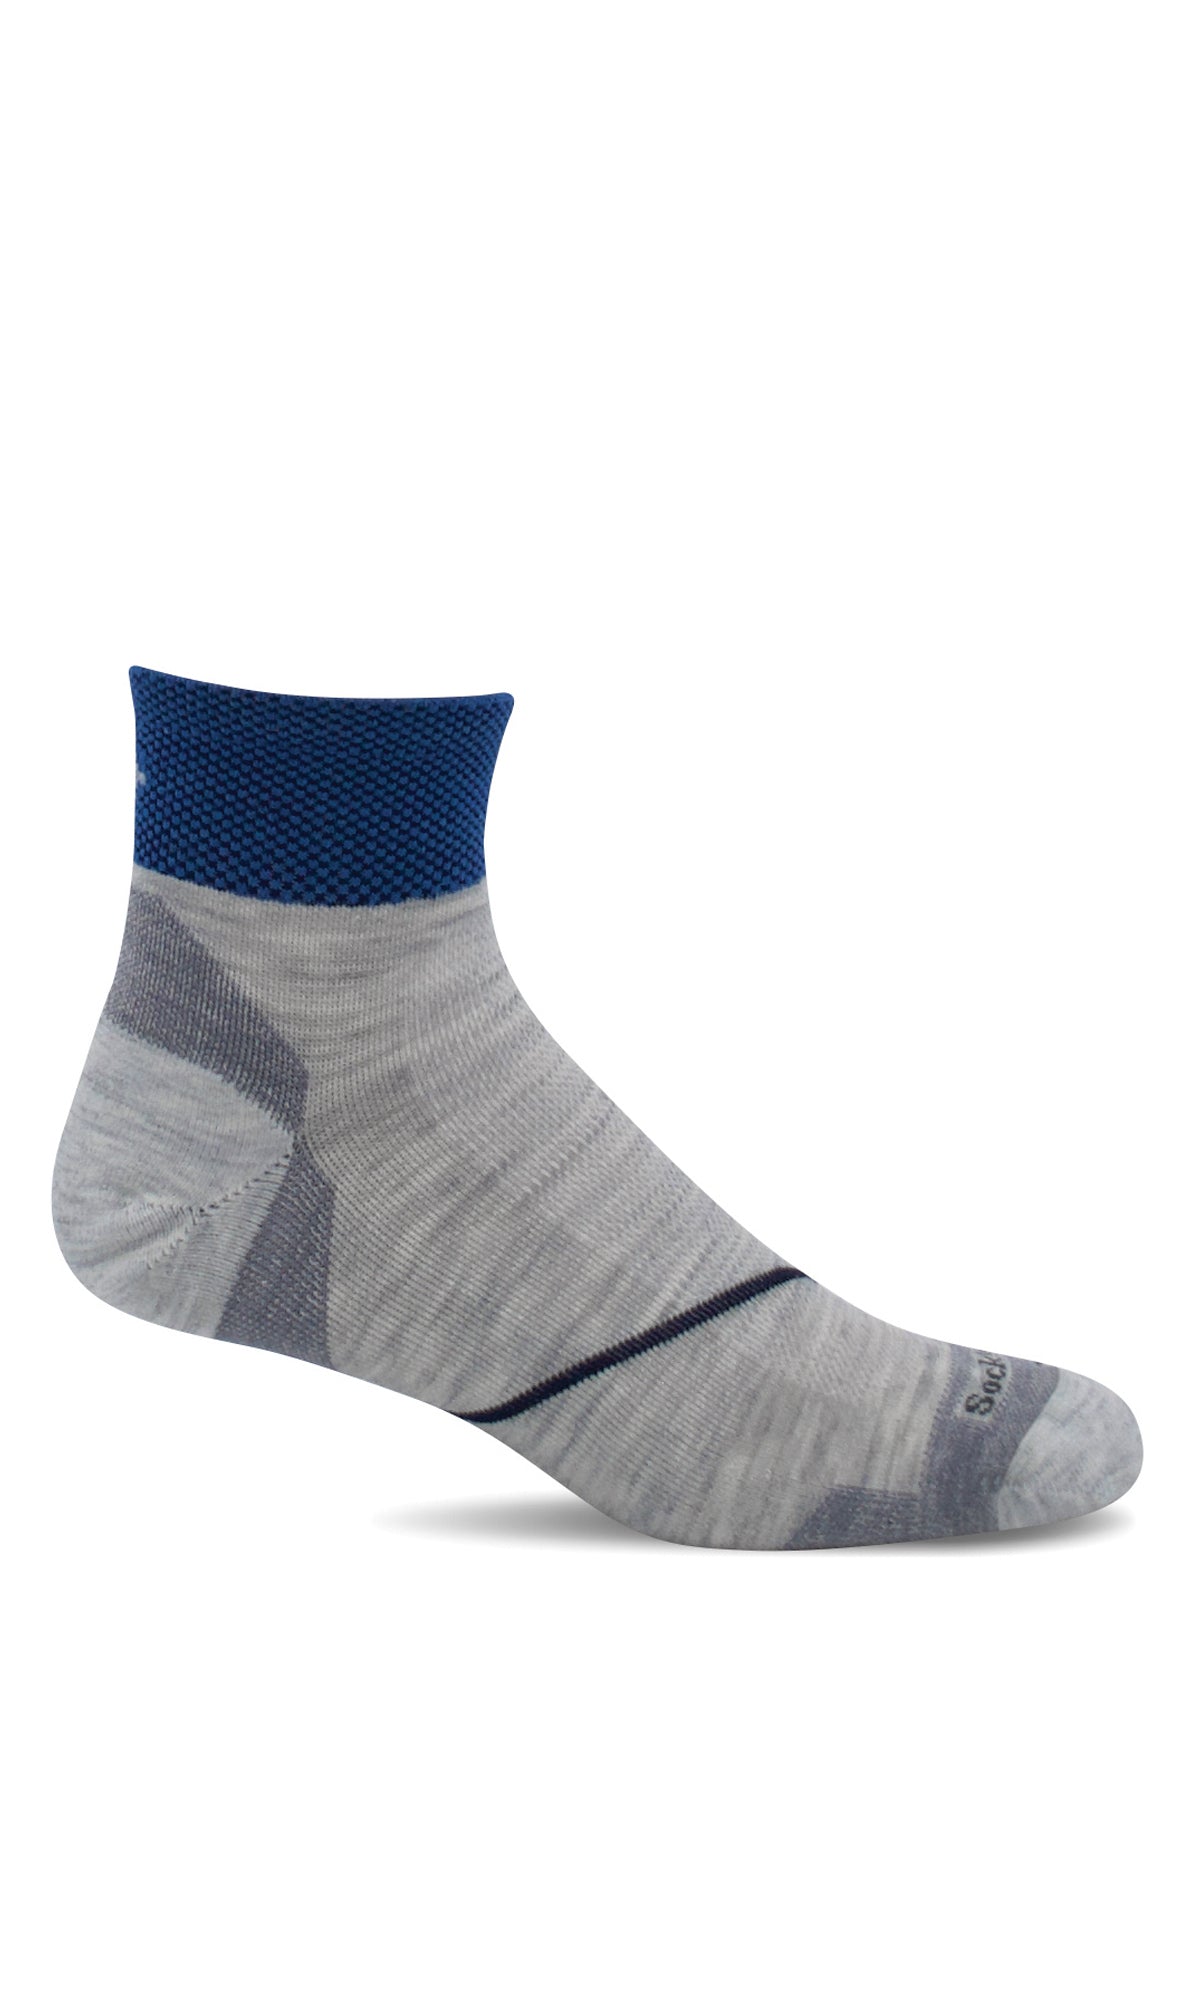 Men's Pulse Quarter | Firm Compression Socks - Merino Wool Sport Compression - Sockwell